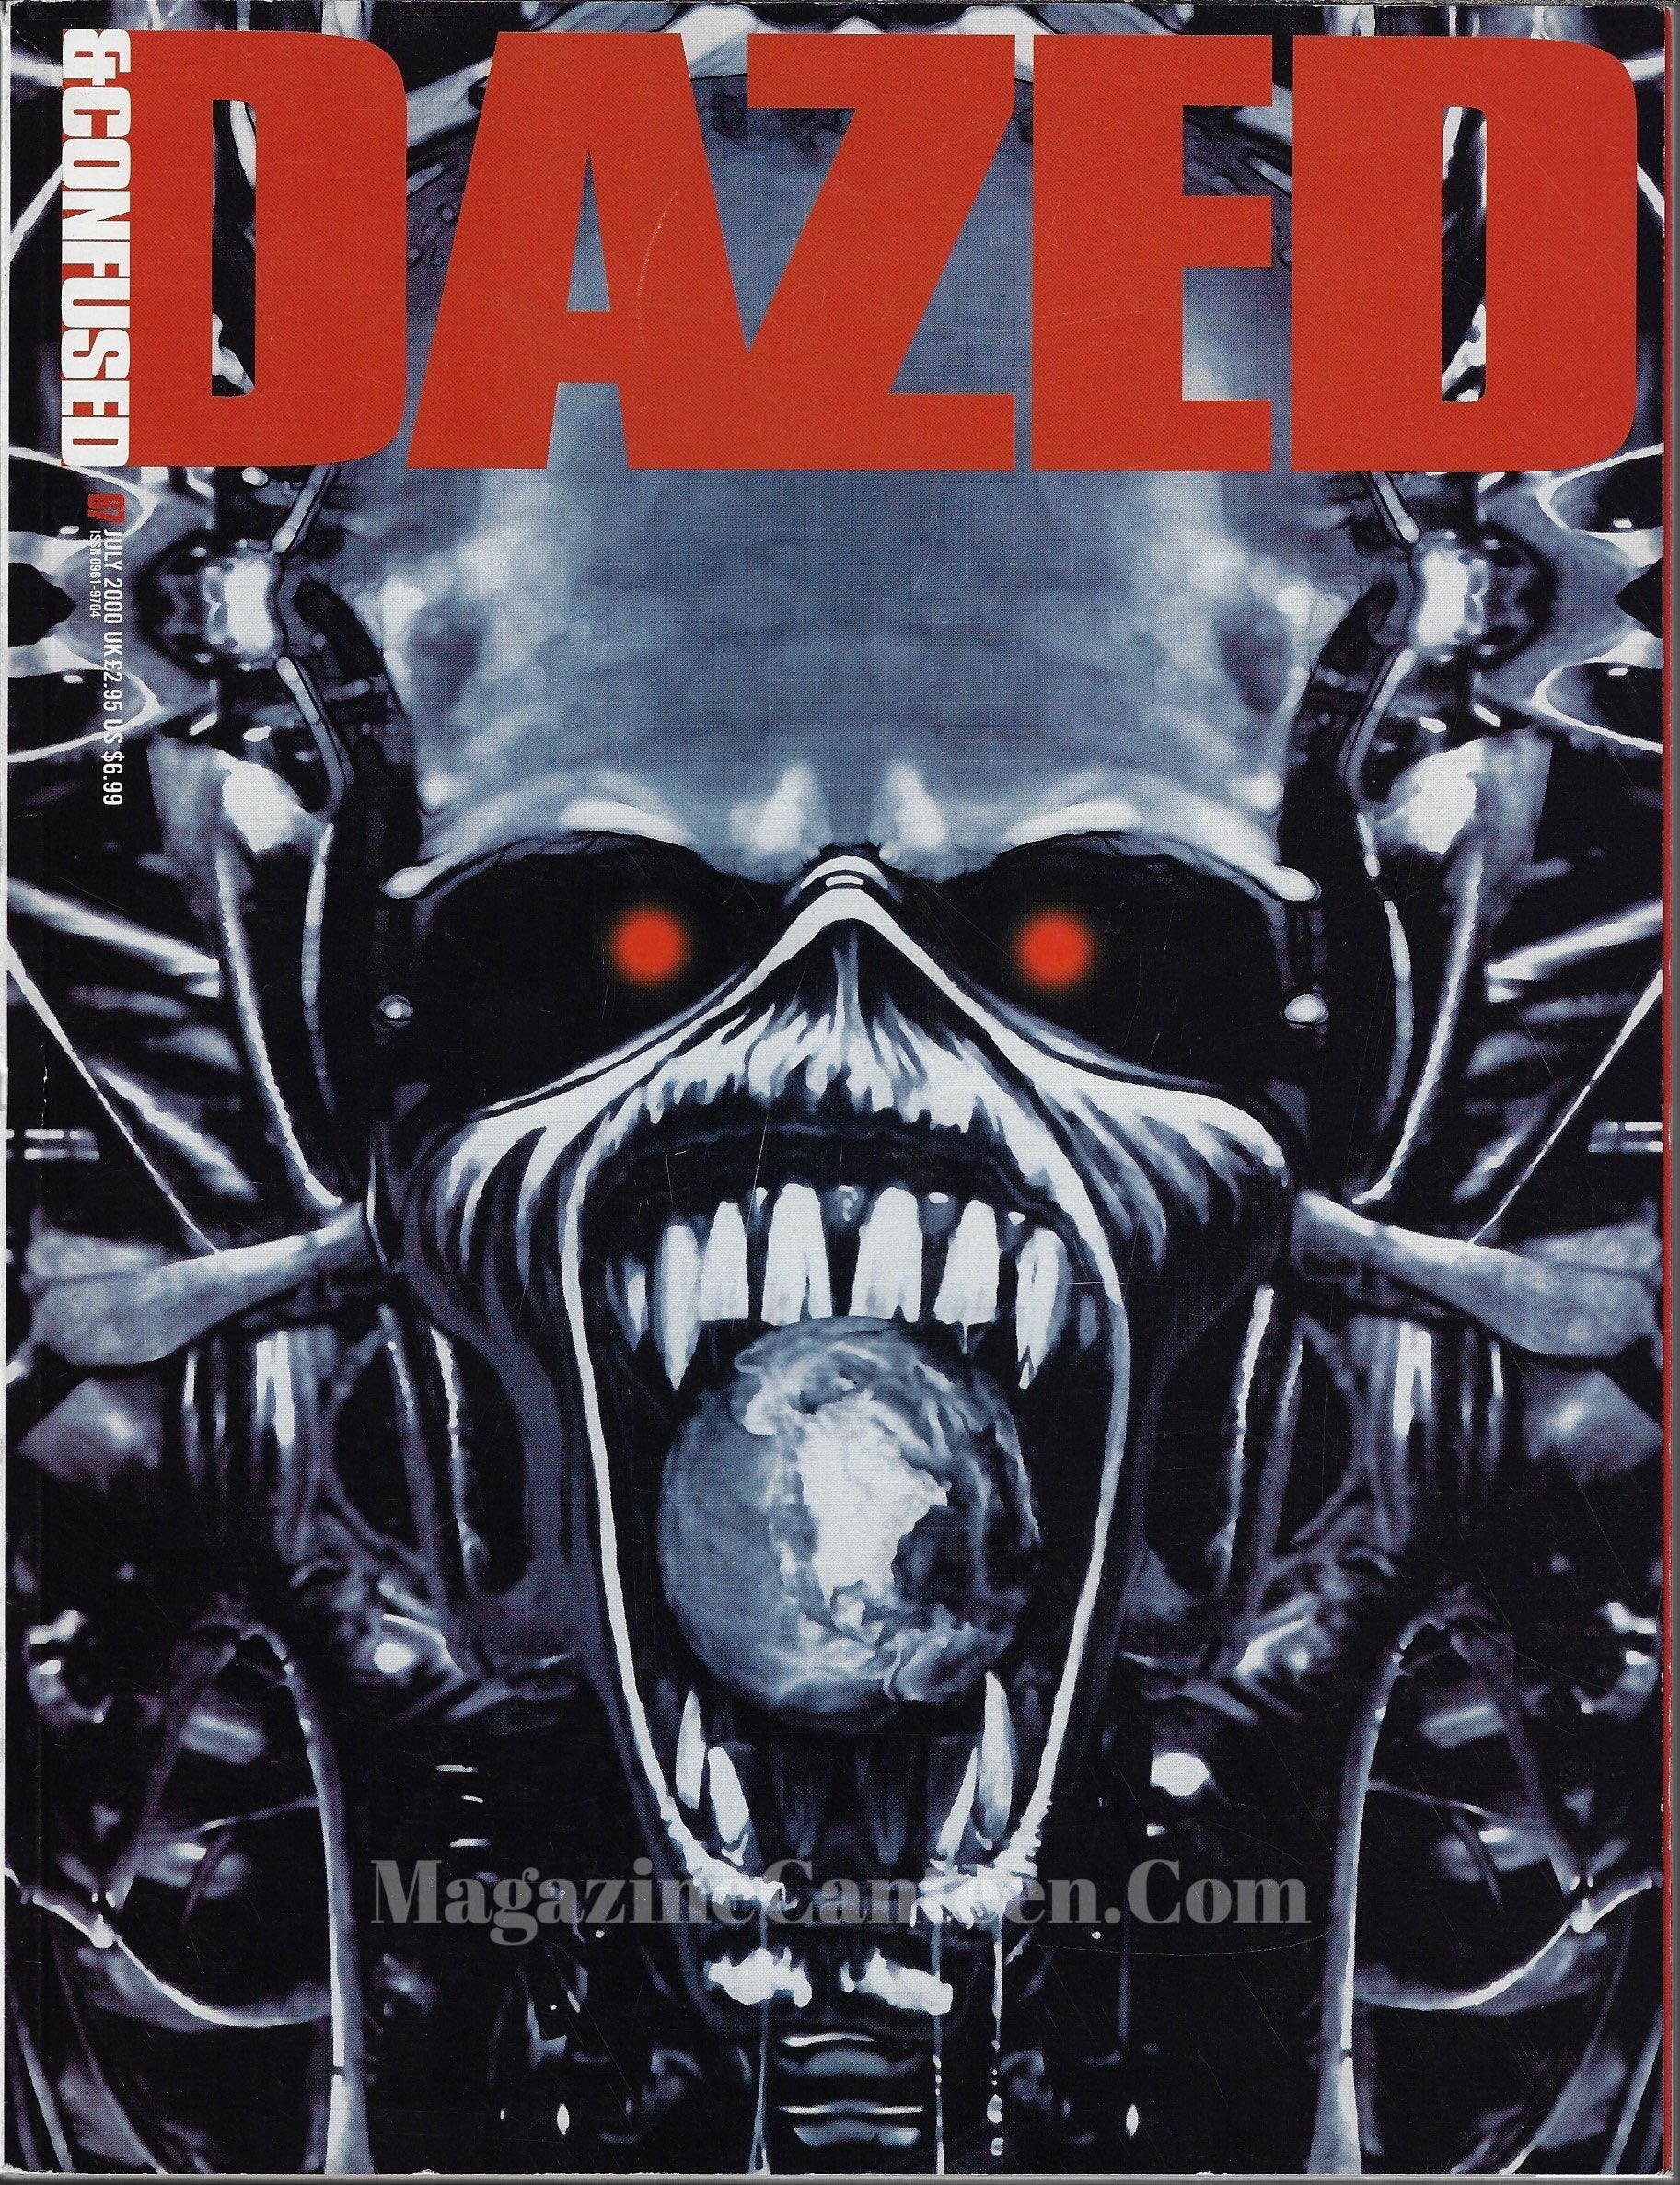 Dazed & Confused Magazine 2000 - Iron Maiden Eddie